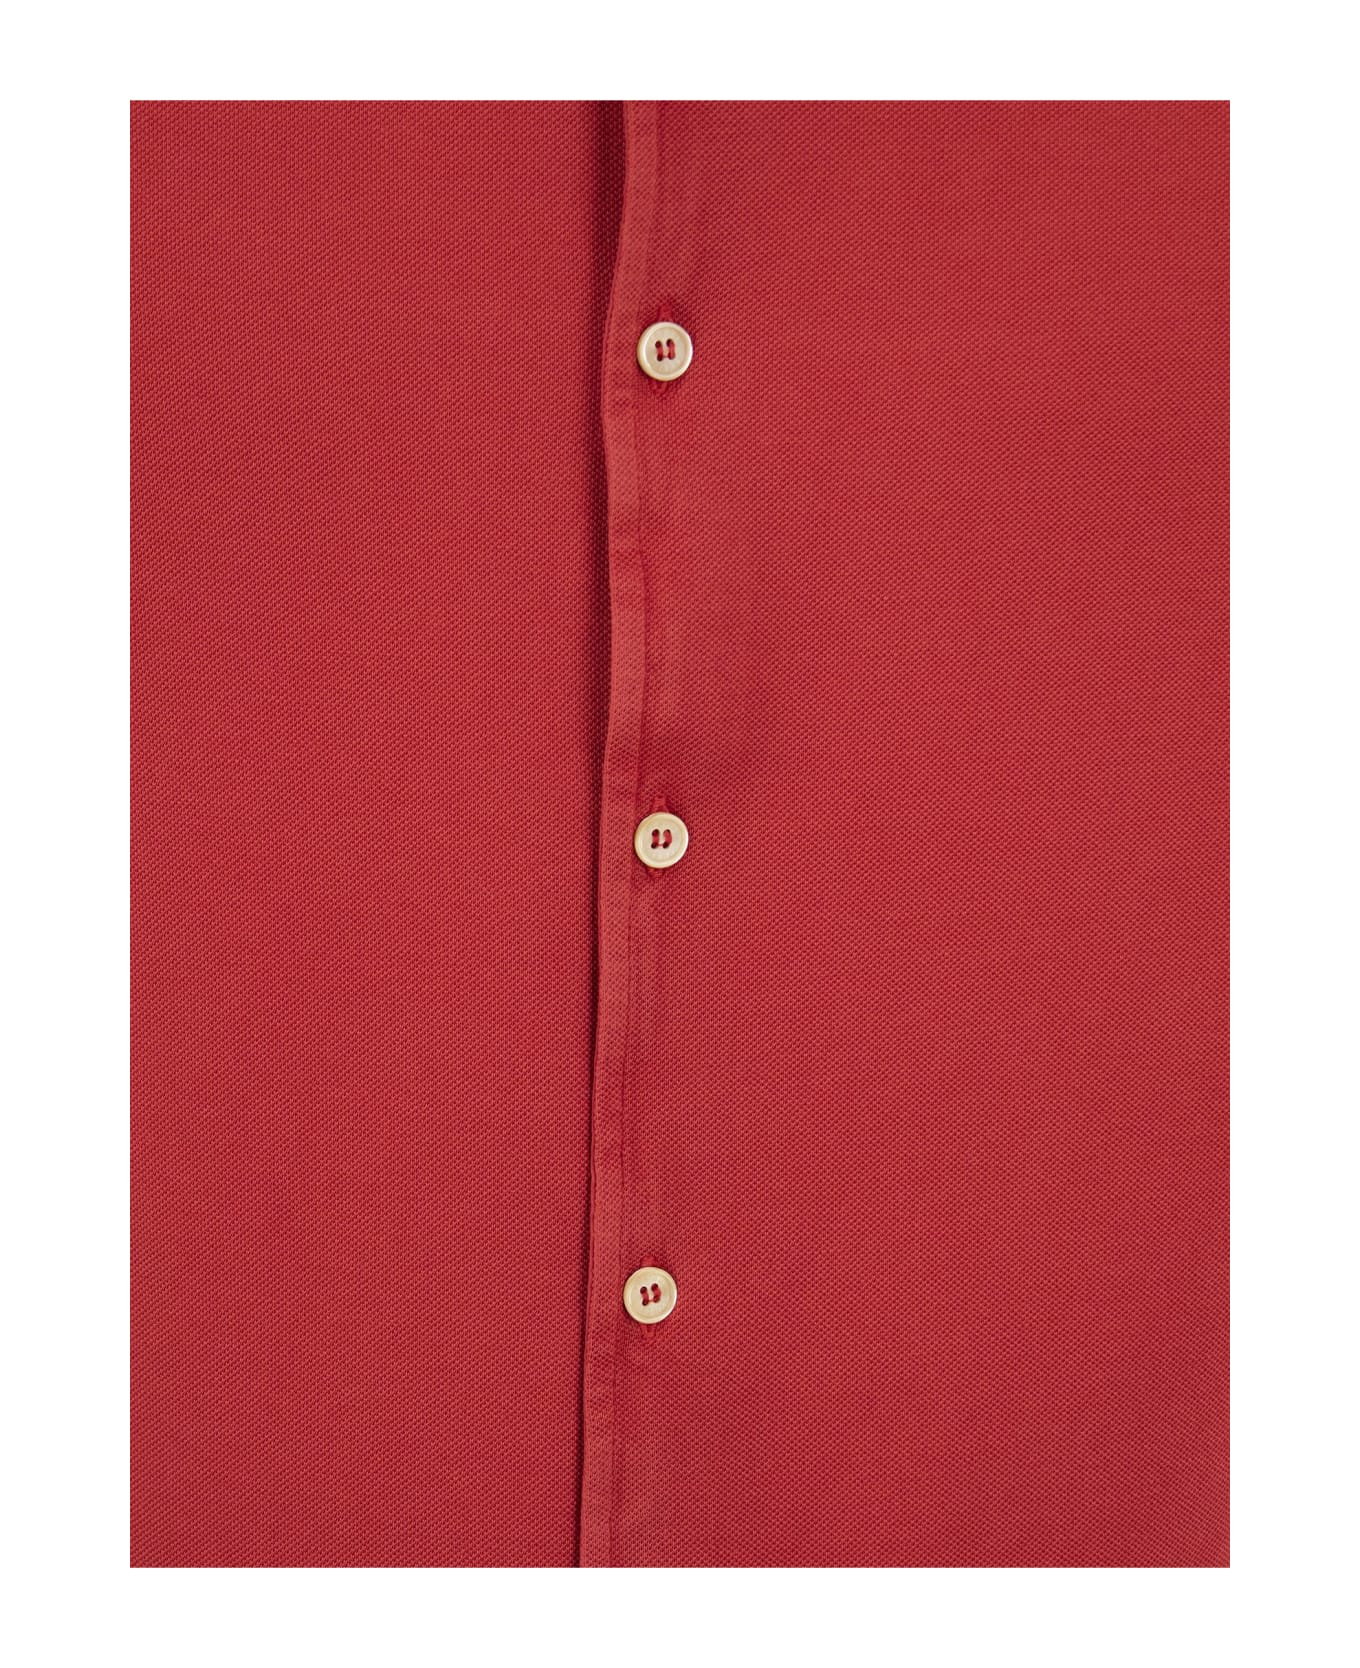 Fedeli Robert - Cotton Piqué Shirt - Red